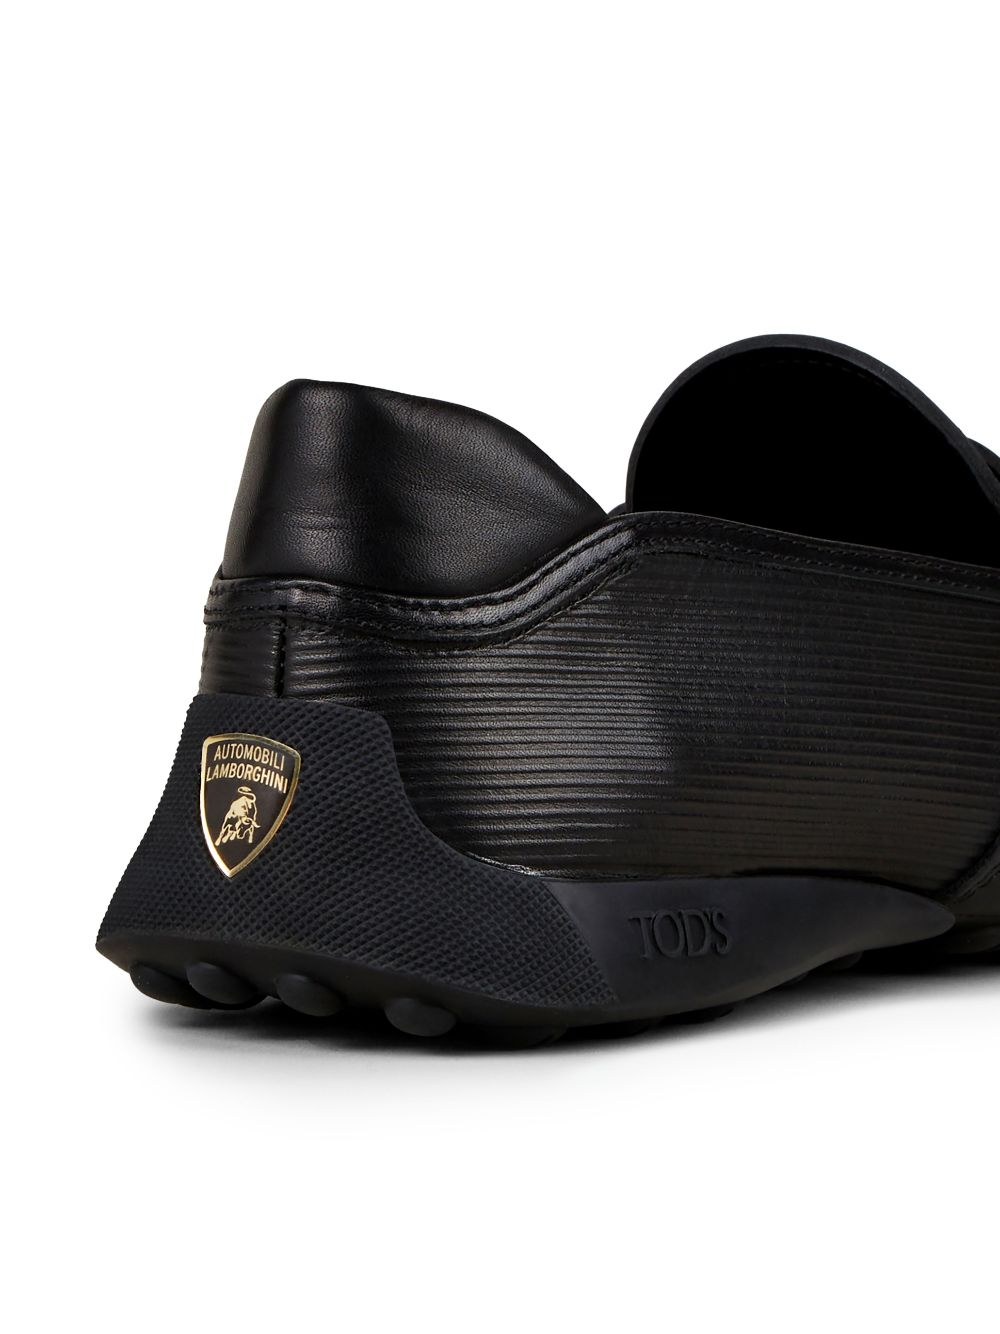 Shop Tod's Automobili Lamborghini Slip-on Leather Driving Shoes In Black